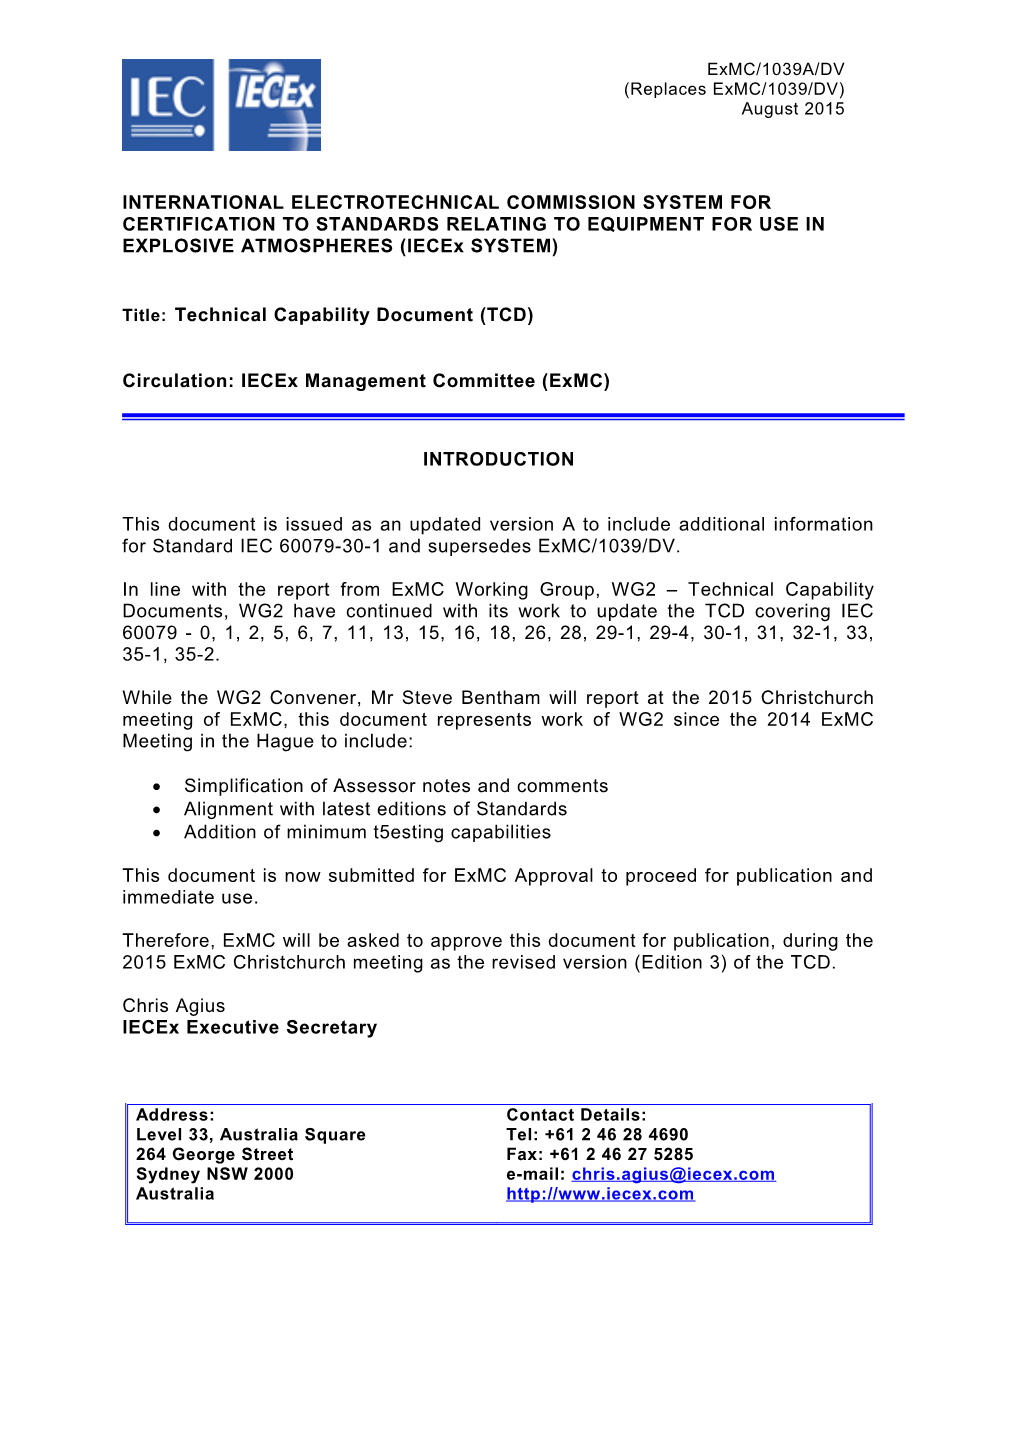 Title:Technical Capability Document (TCD)